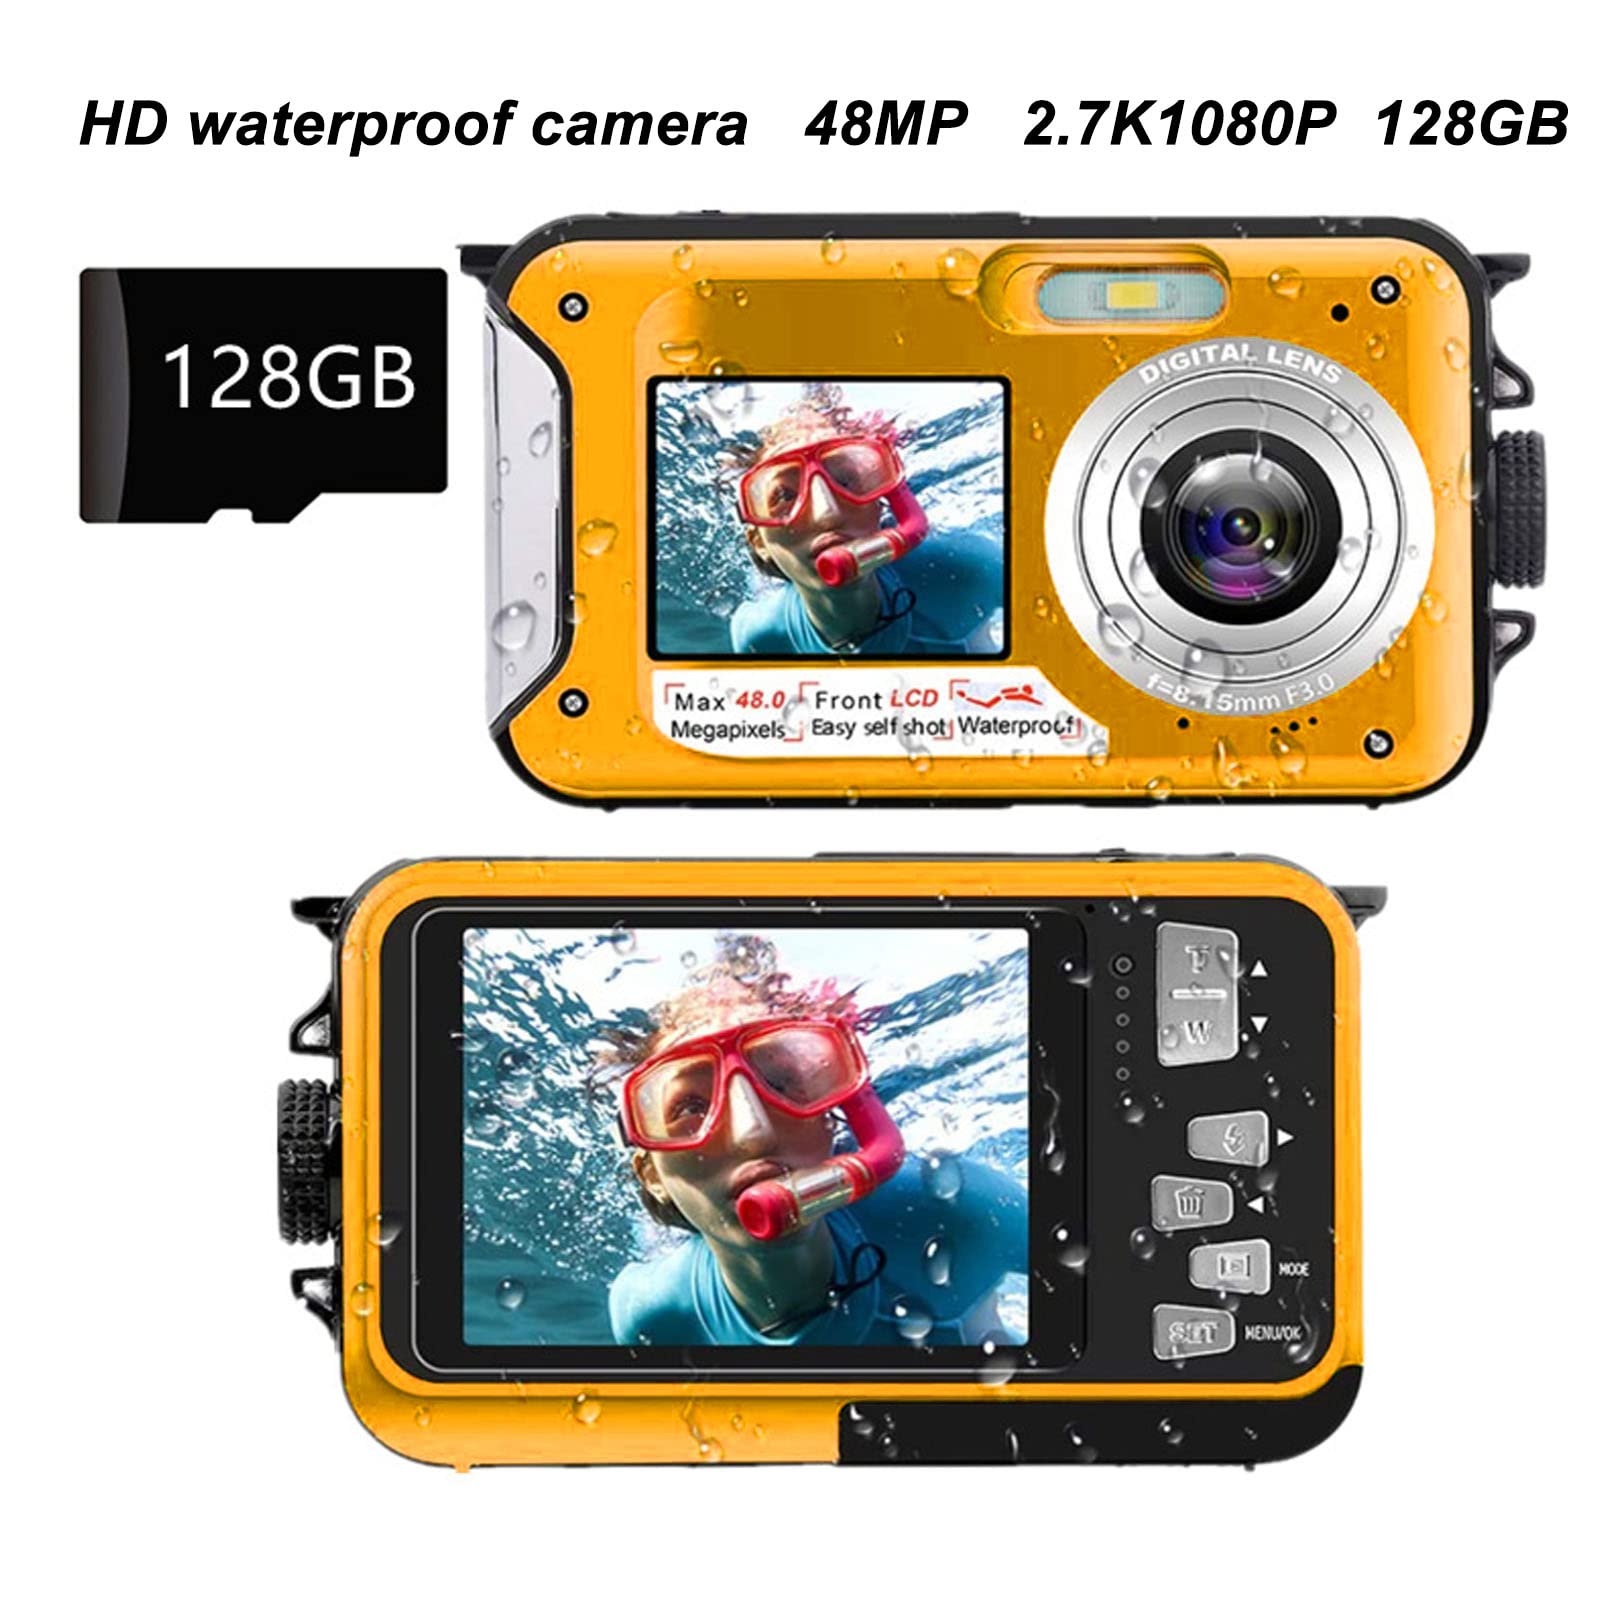 Waterproof Camera Underwater Camera 10 FT 2.7K Full HD 48MP 16X Digital Zoom Waterproof Digital Camera Self-Timer Dual Screens Anti Shake for Snorkeling,plplaaoo Travel and Vacation(Yellow), Wat